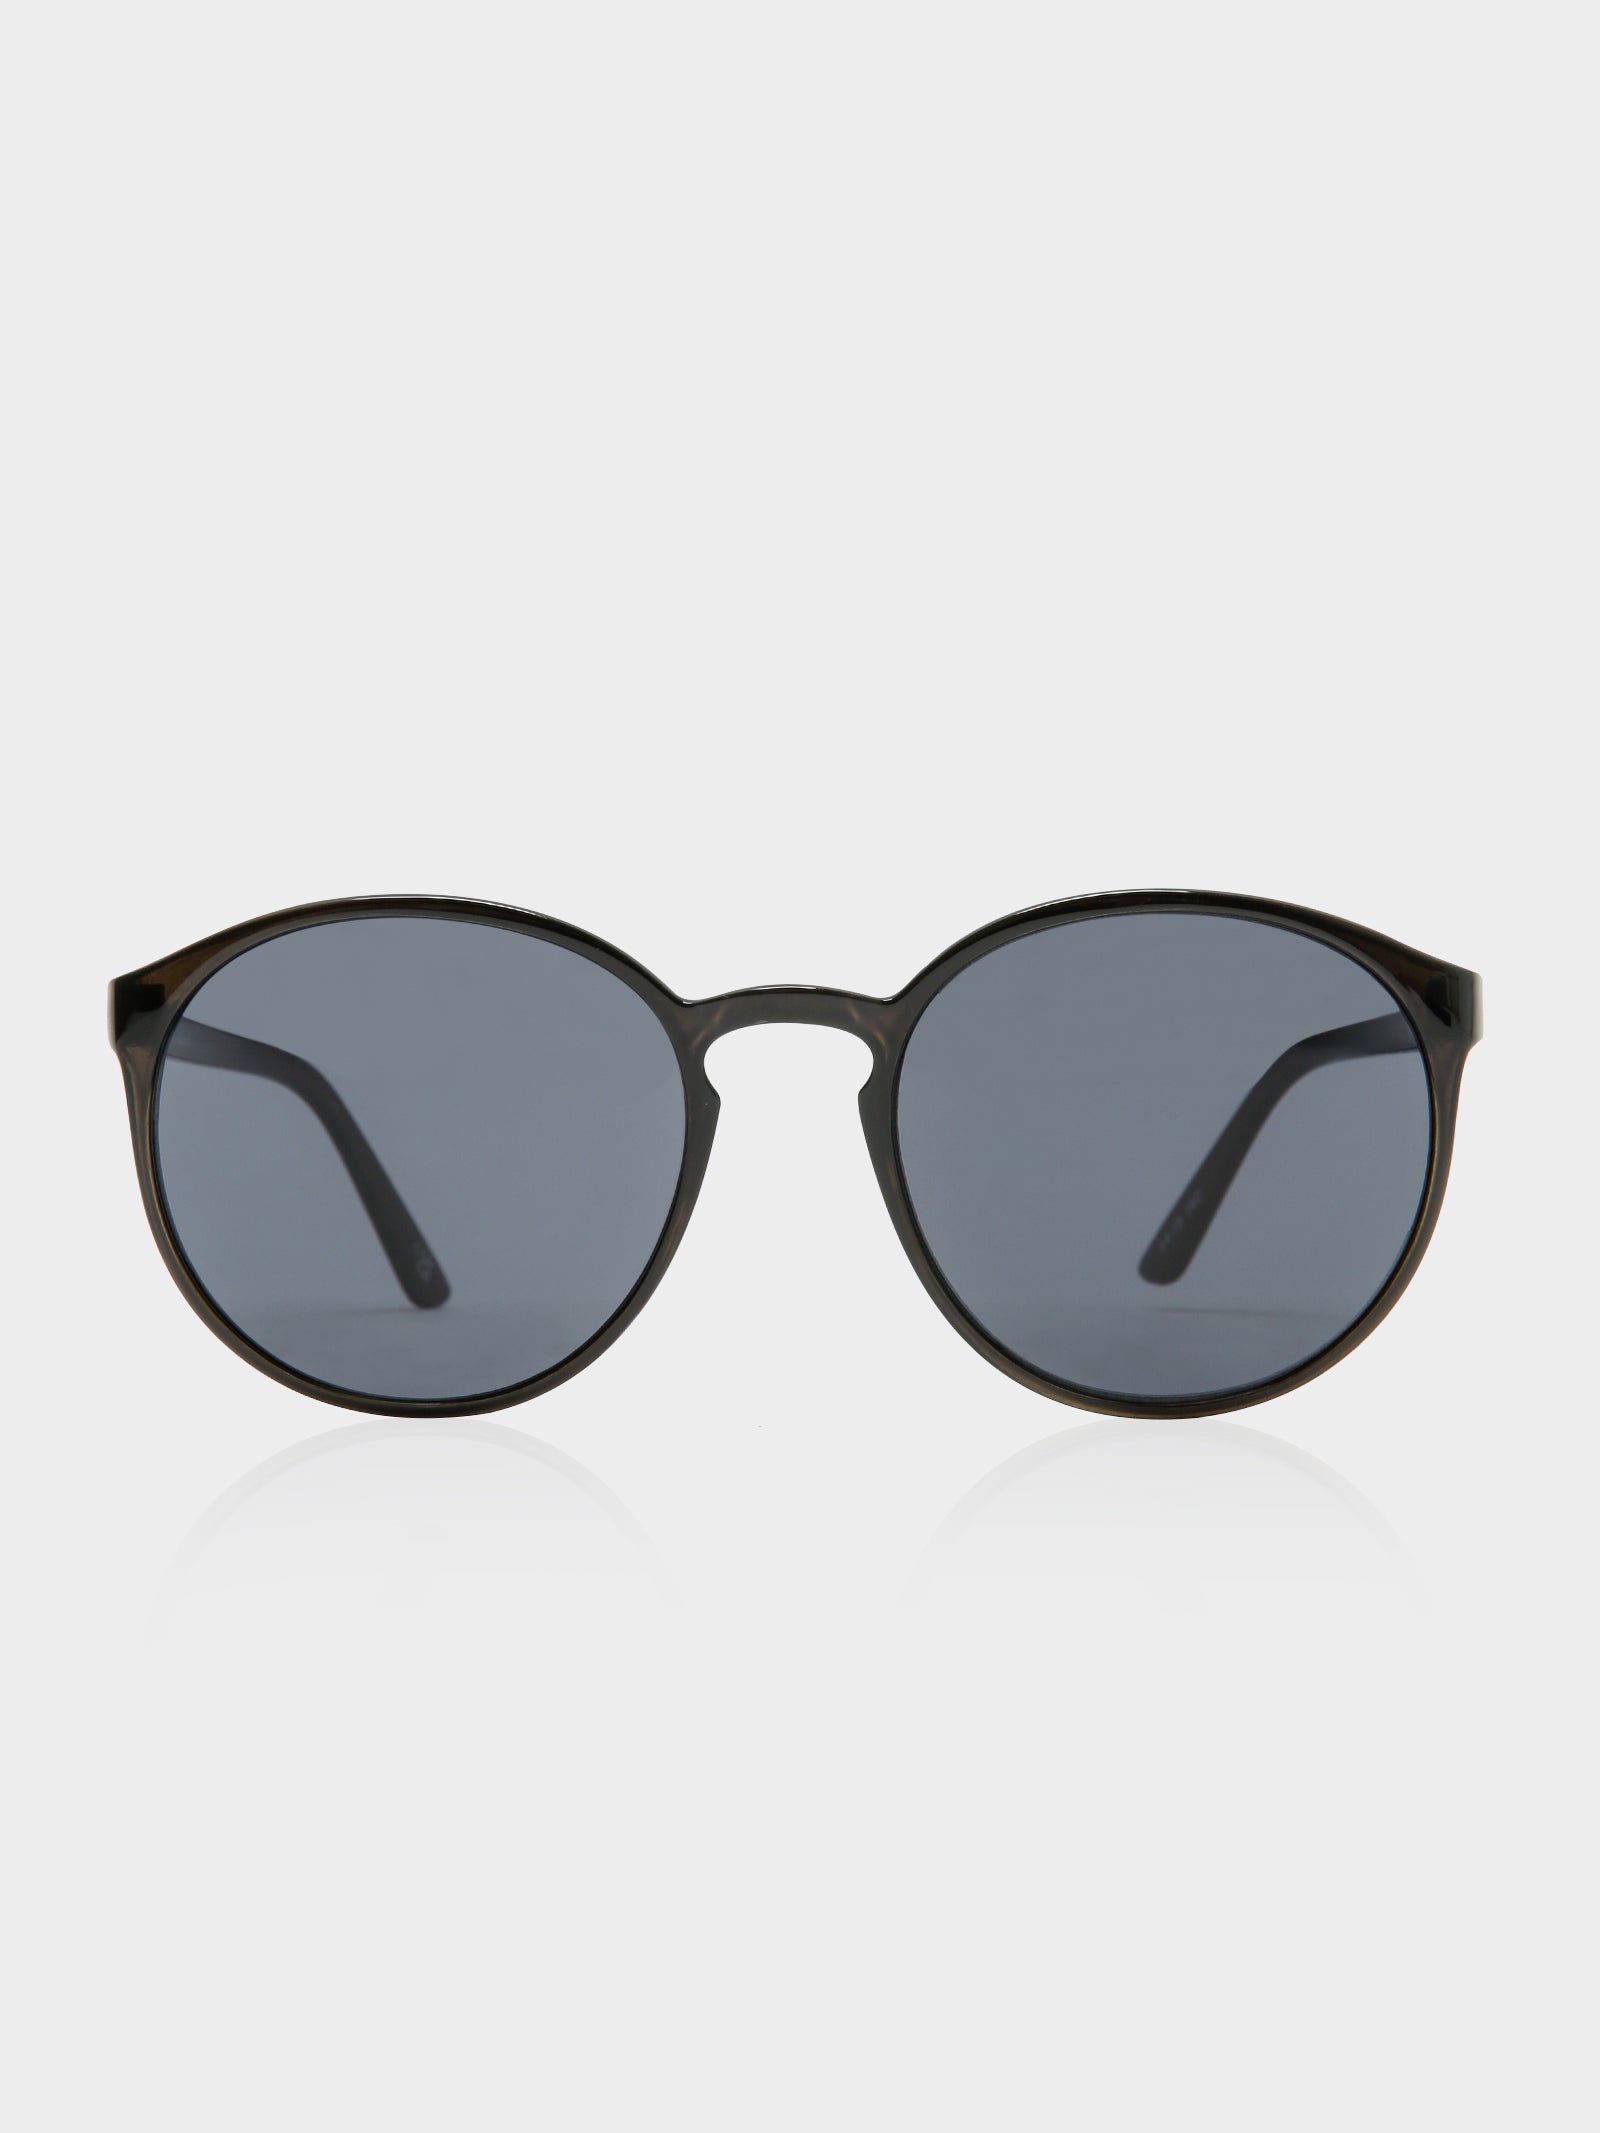 Sunglasses Black & Charcoal Grey - Glue Store